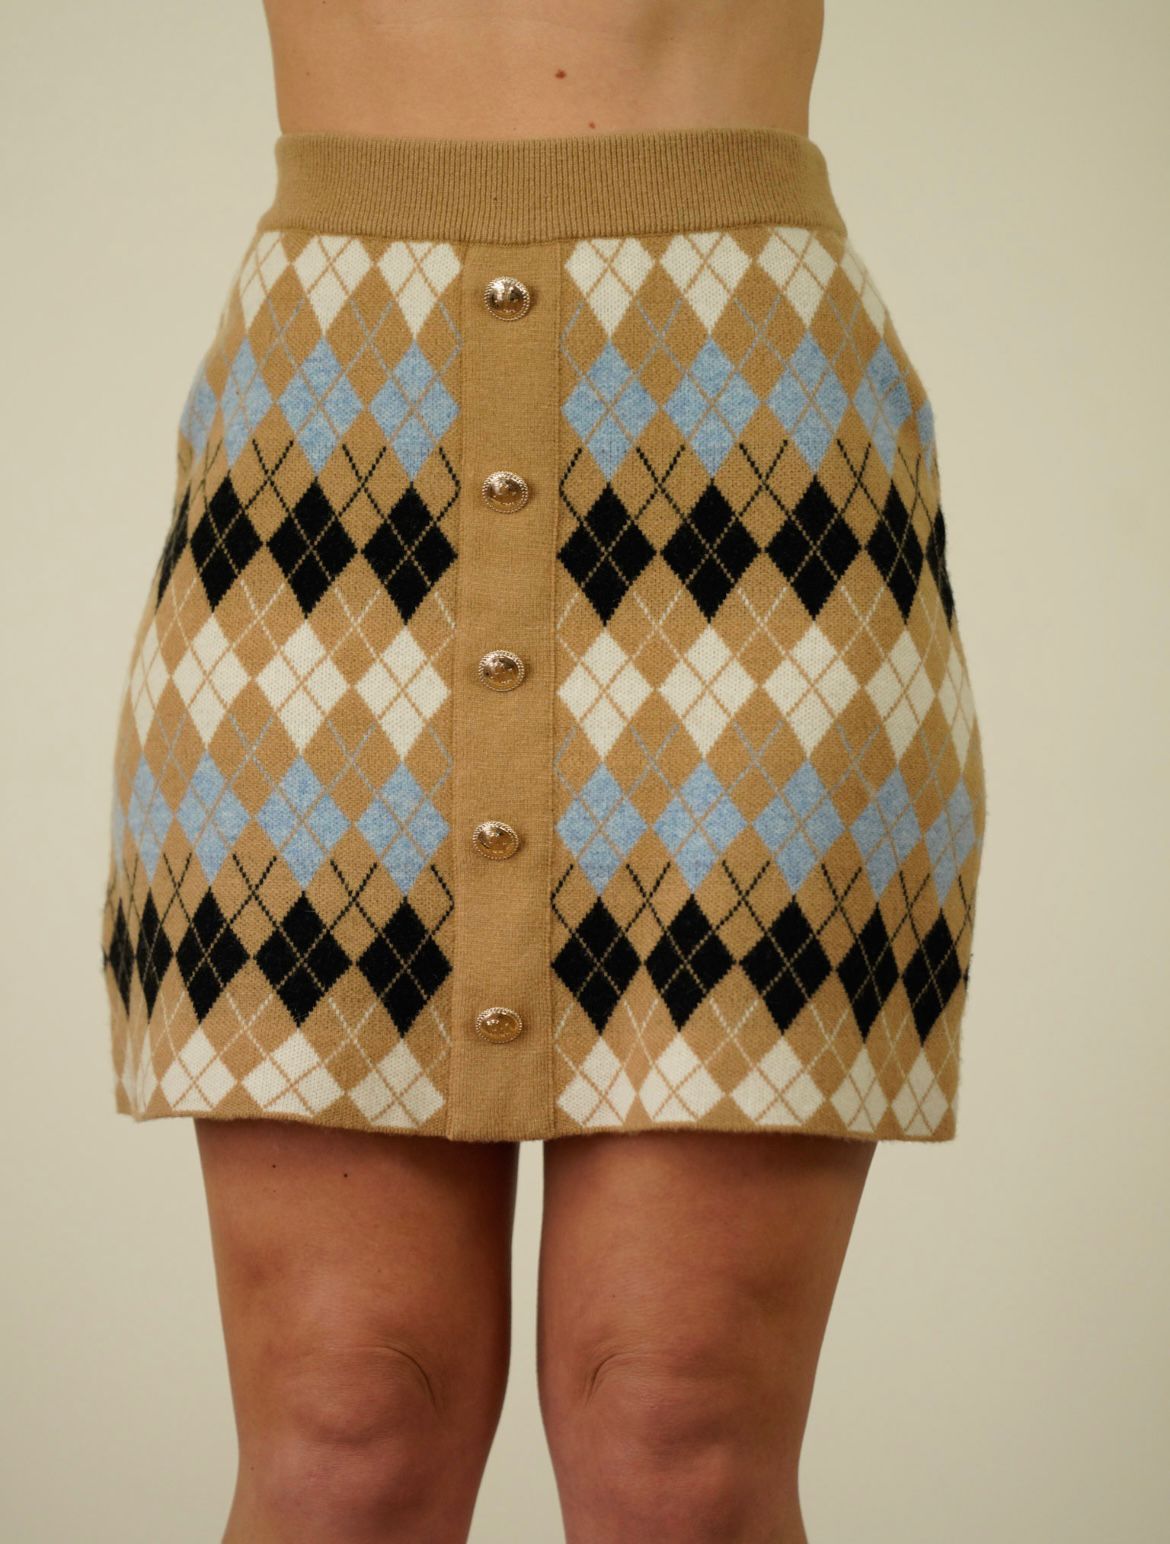 Brand new Maje skirt size 36 RTP £240